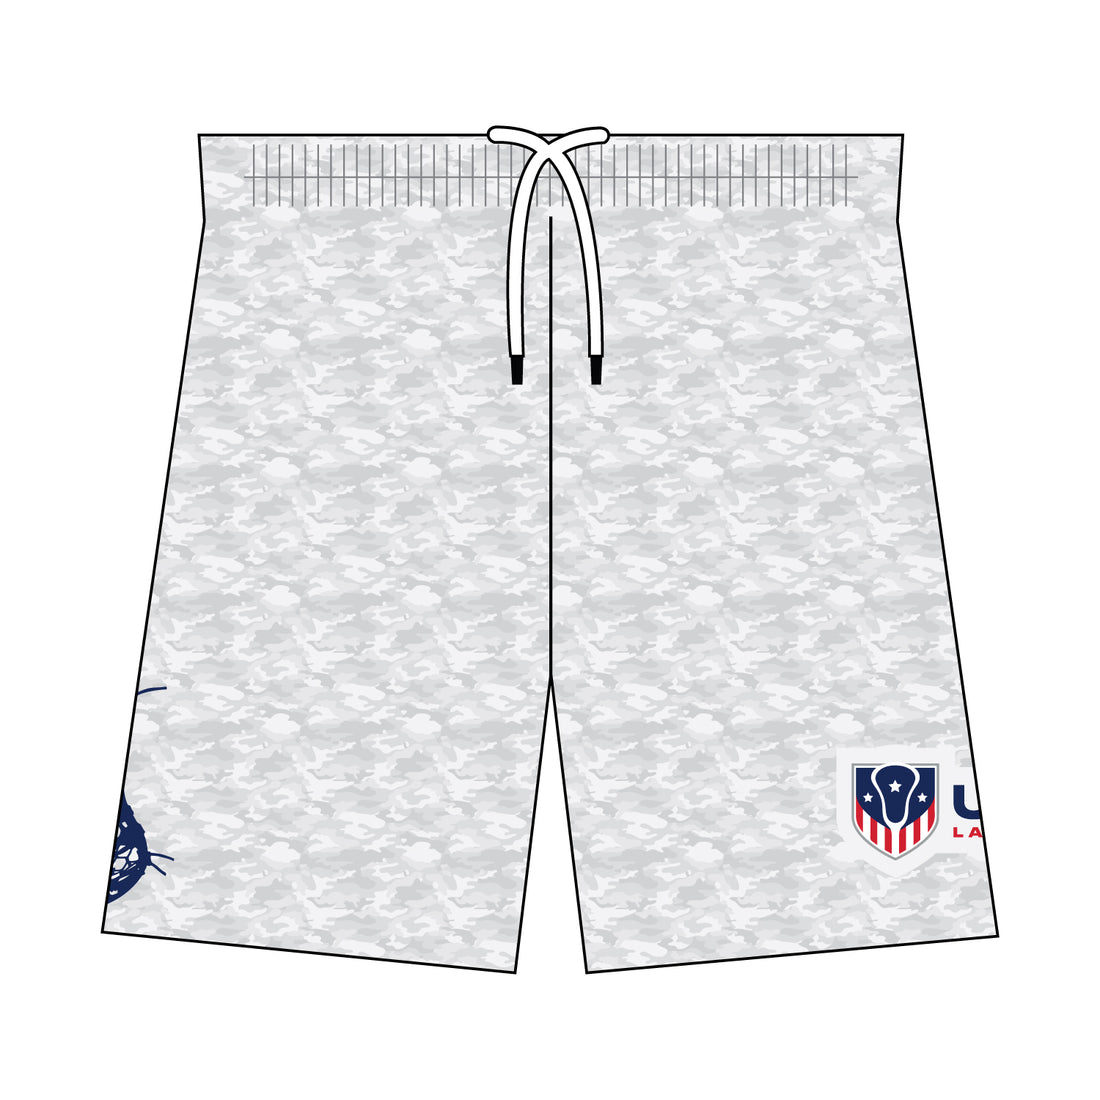 Youth USA Lacrosse Grey Camo Shorts